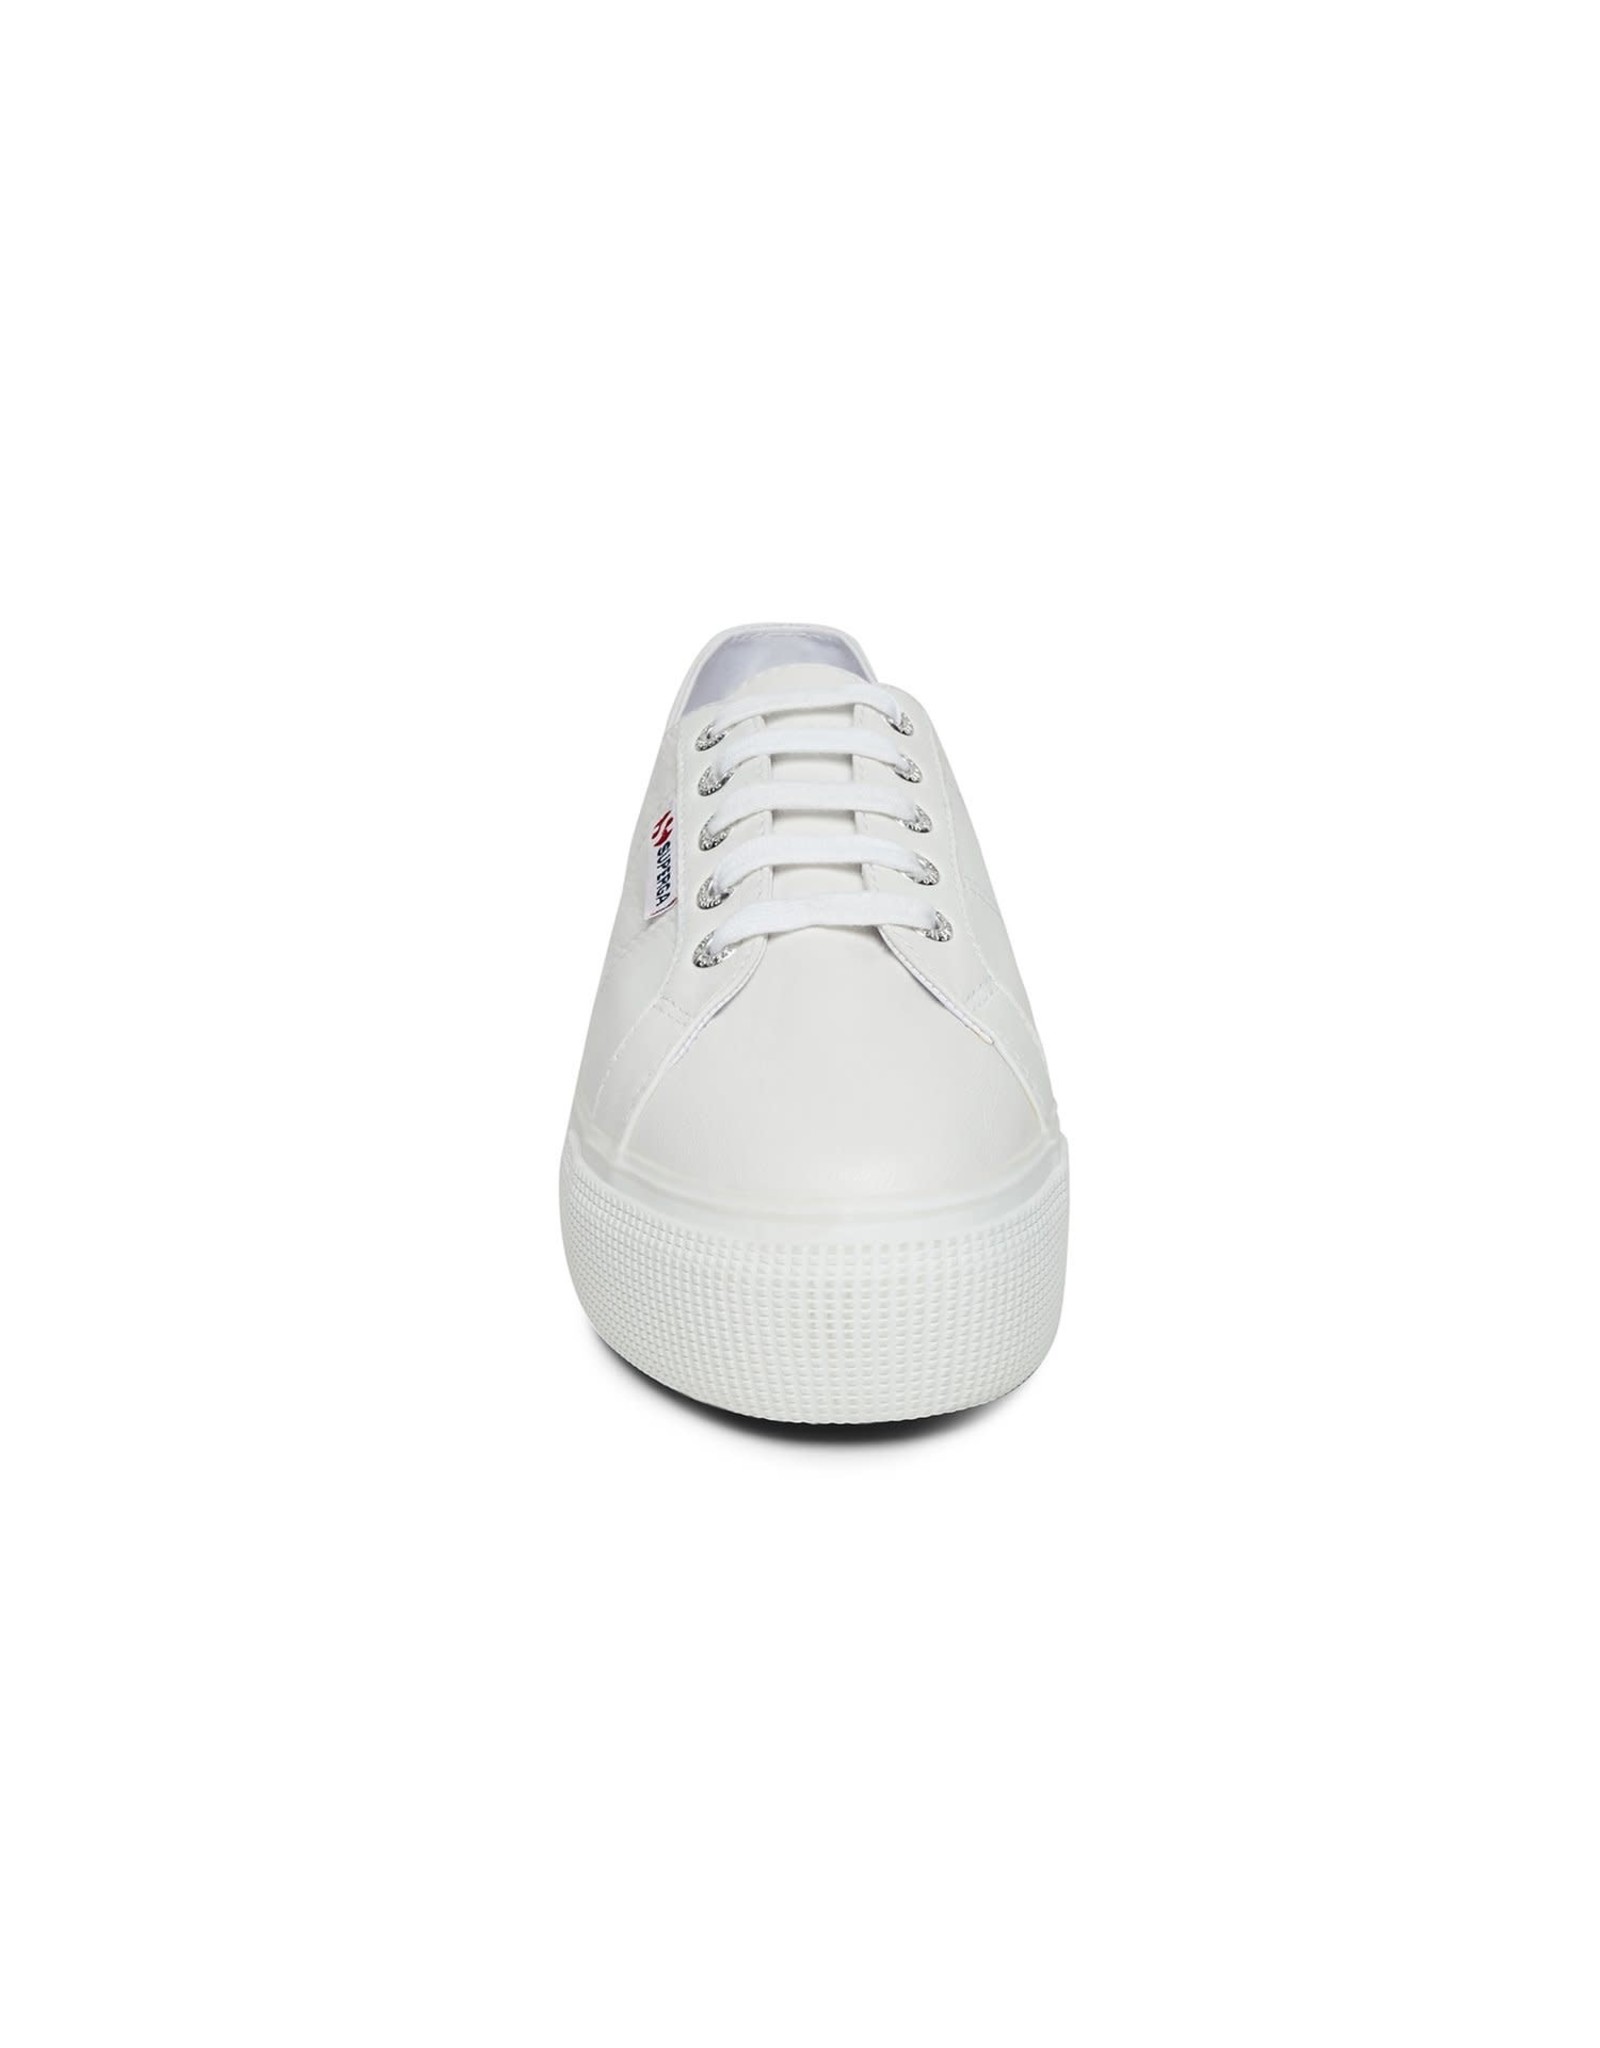 Superga Superga - 2790 platform sneaker (white nappa leather)